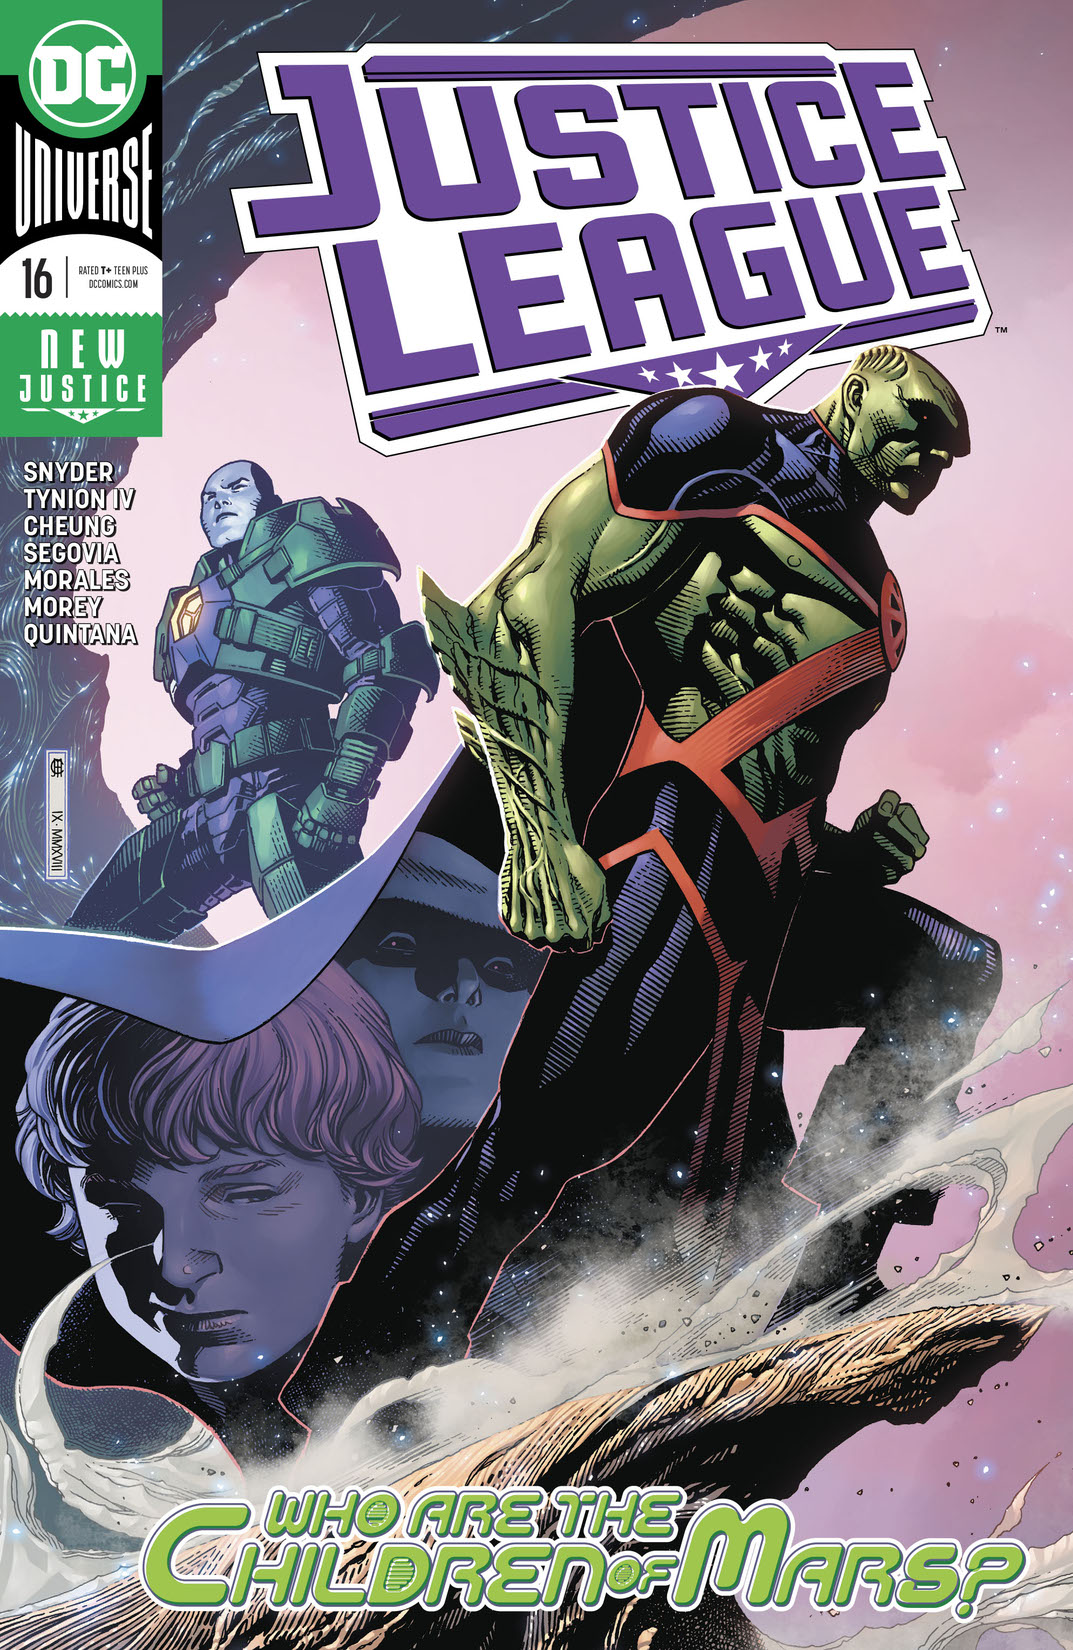 Justice League (2018-) #16 preview images